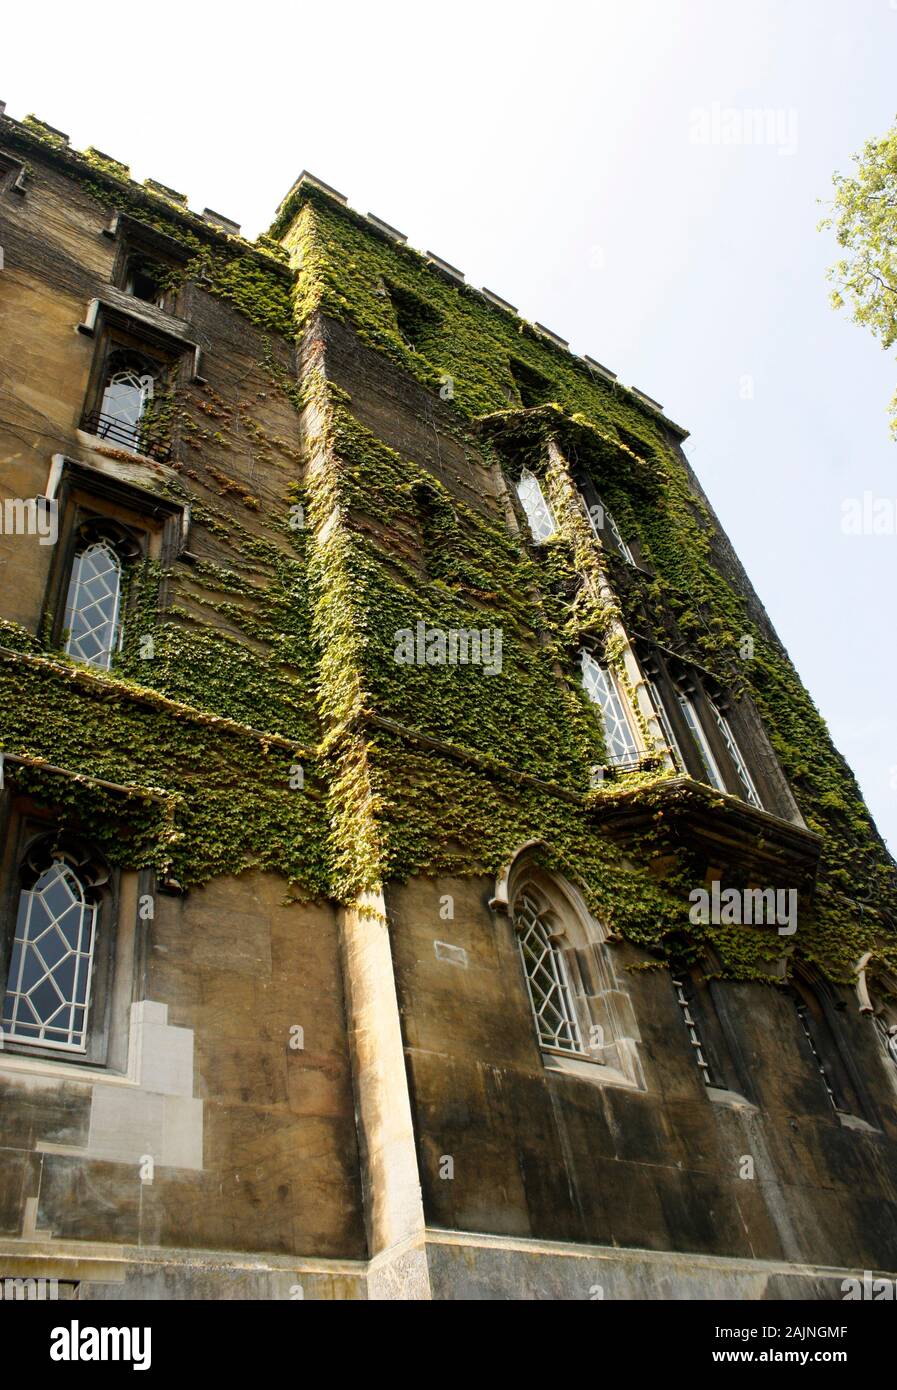 UK, Cambridge - College walls grown with moss Stock Photo